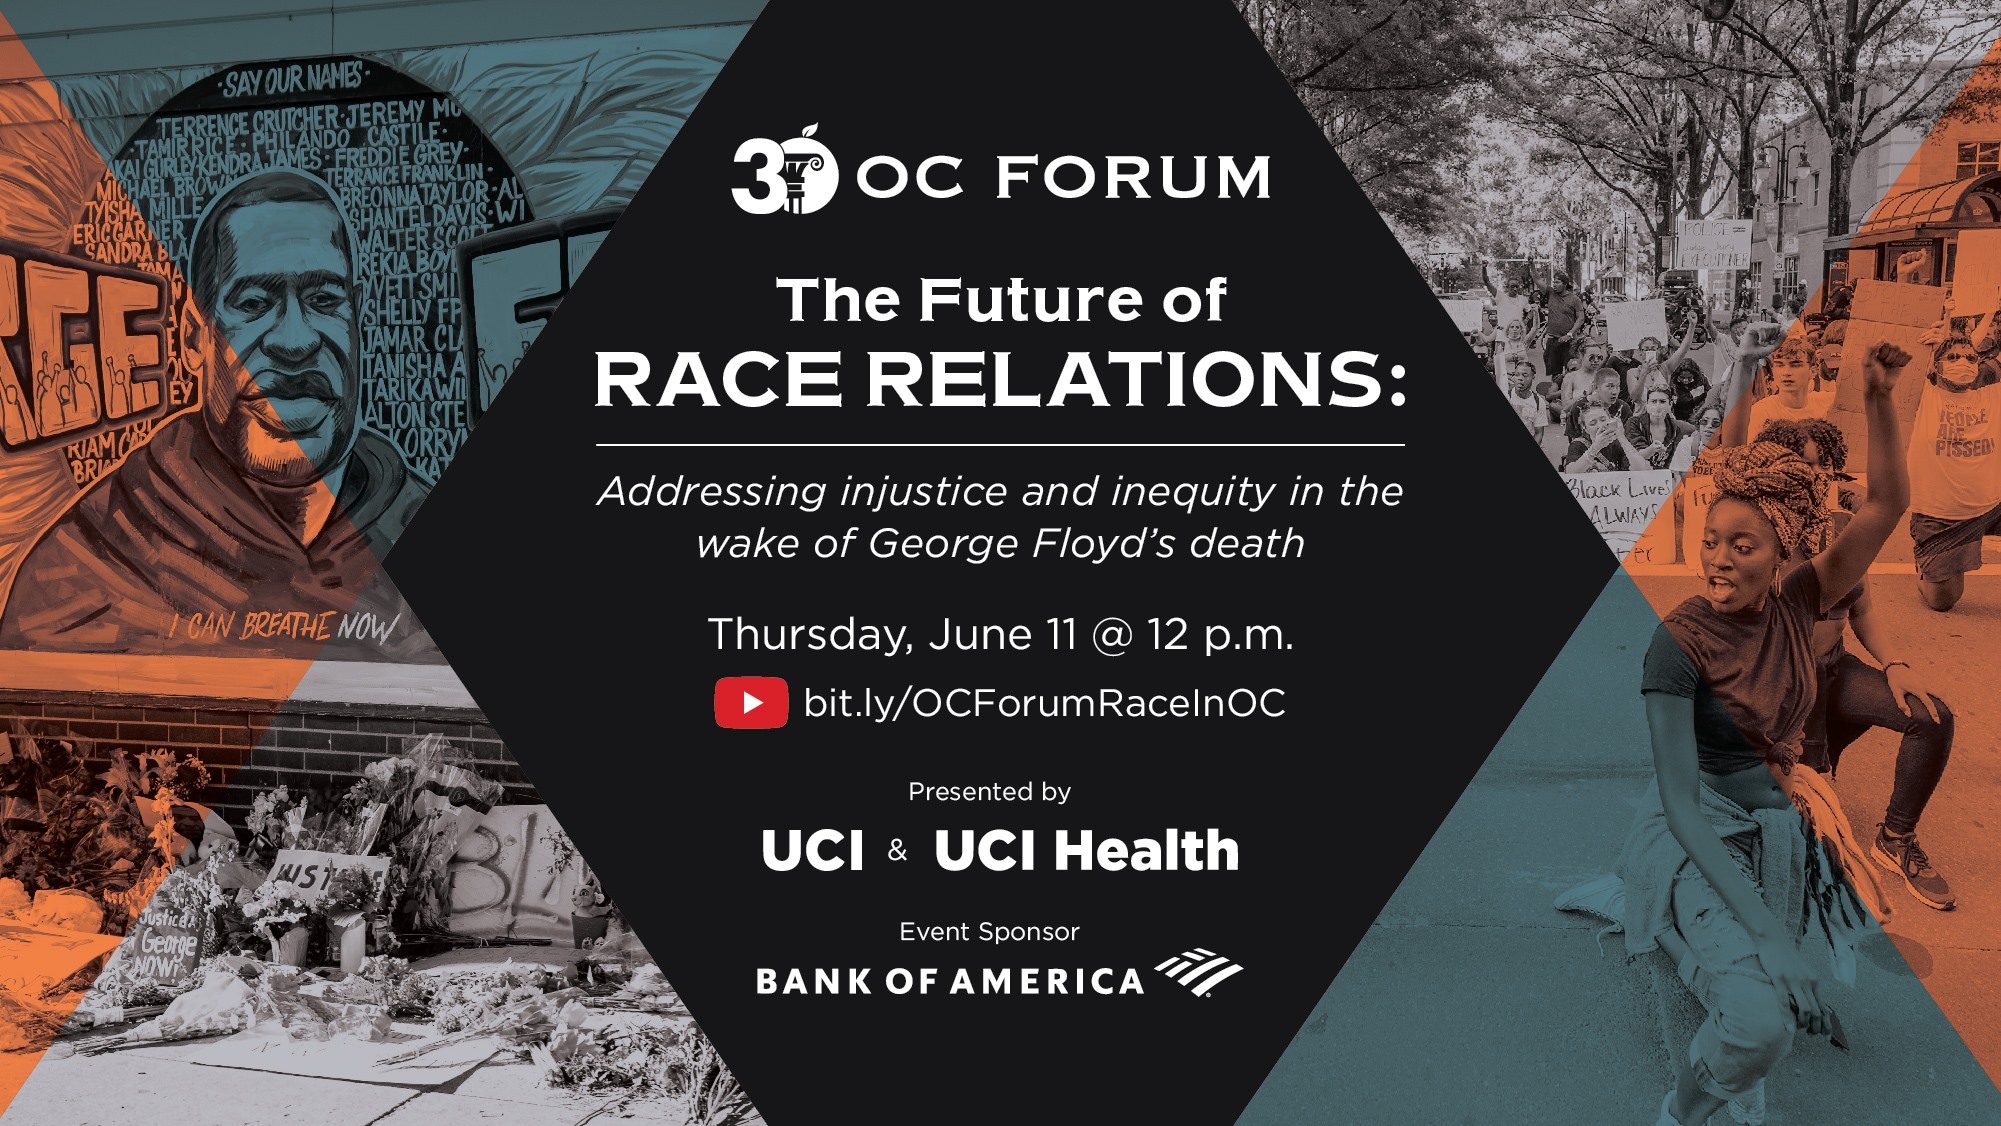 Vega Awards - OC Forum The Future of Race Relations